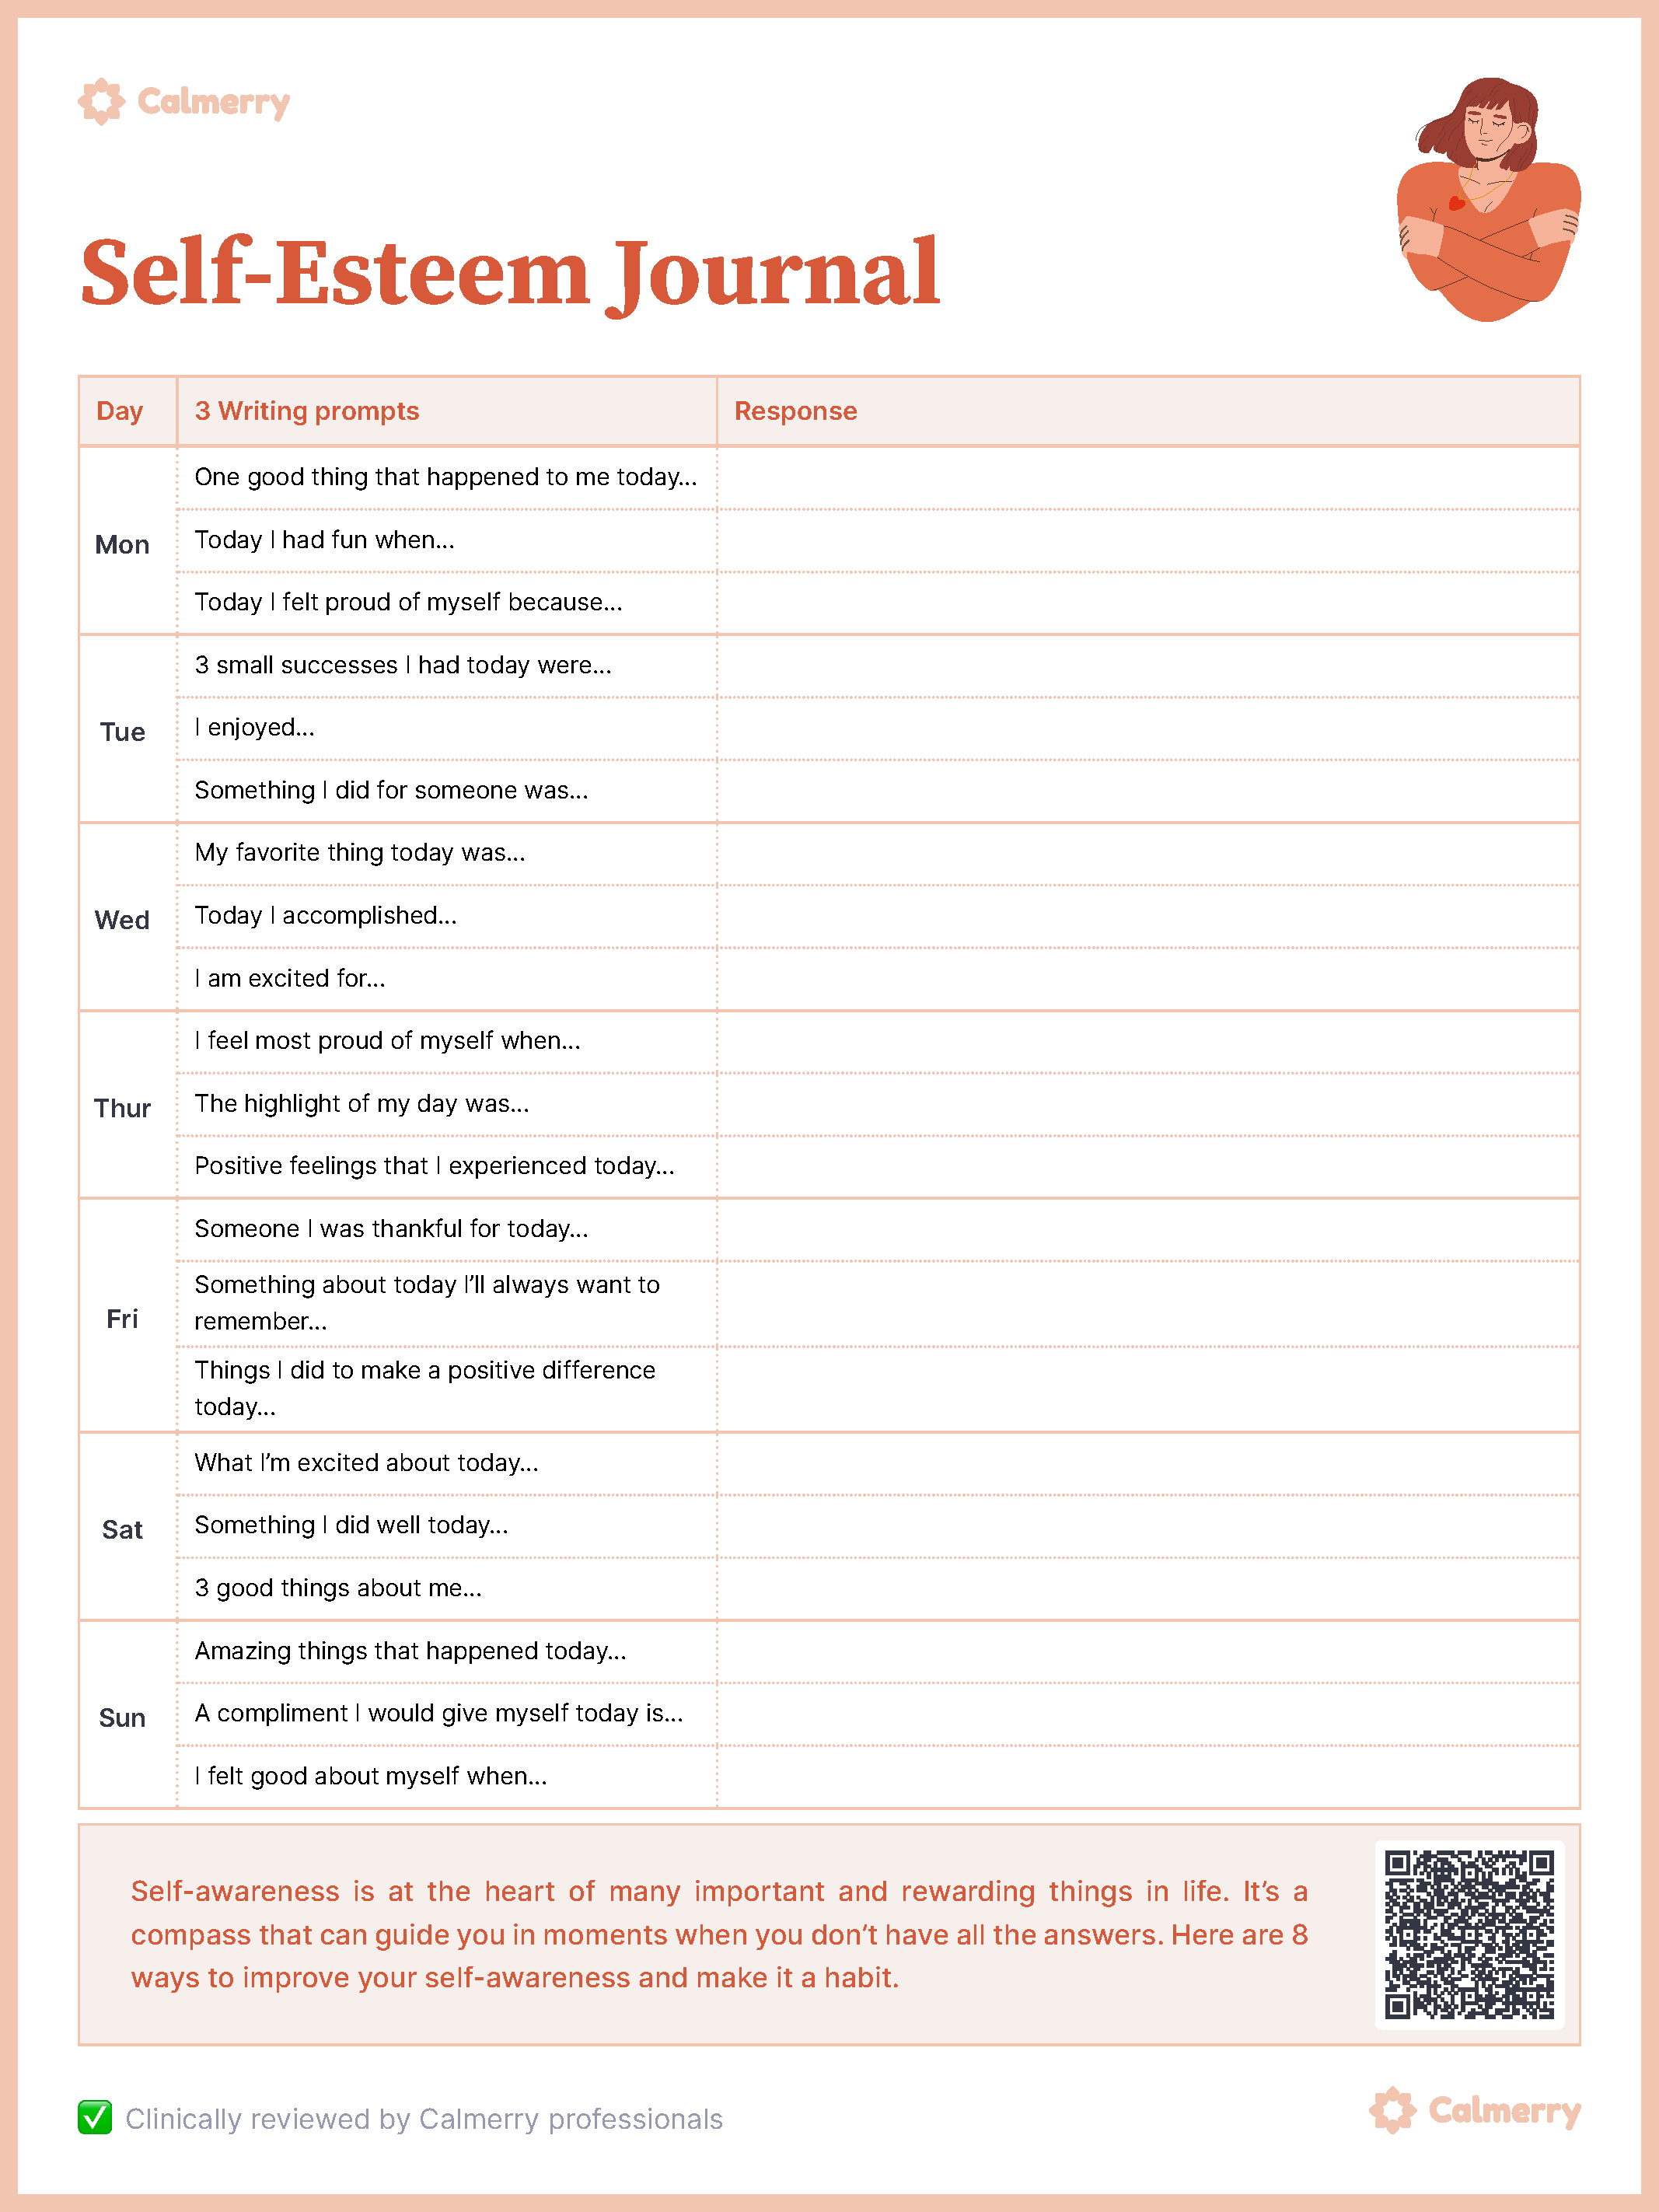 Self-esteem journal worksheet